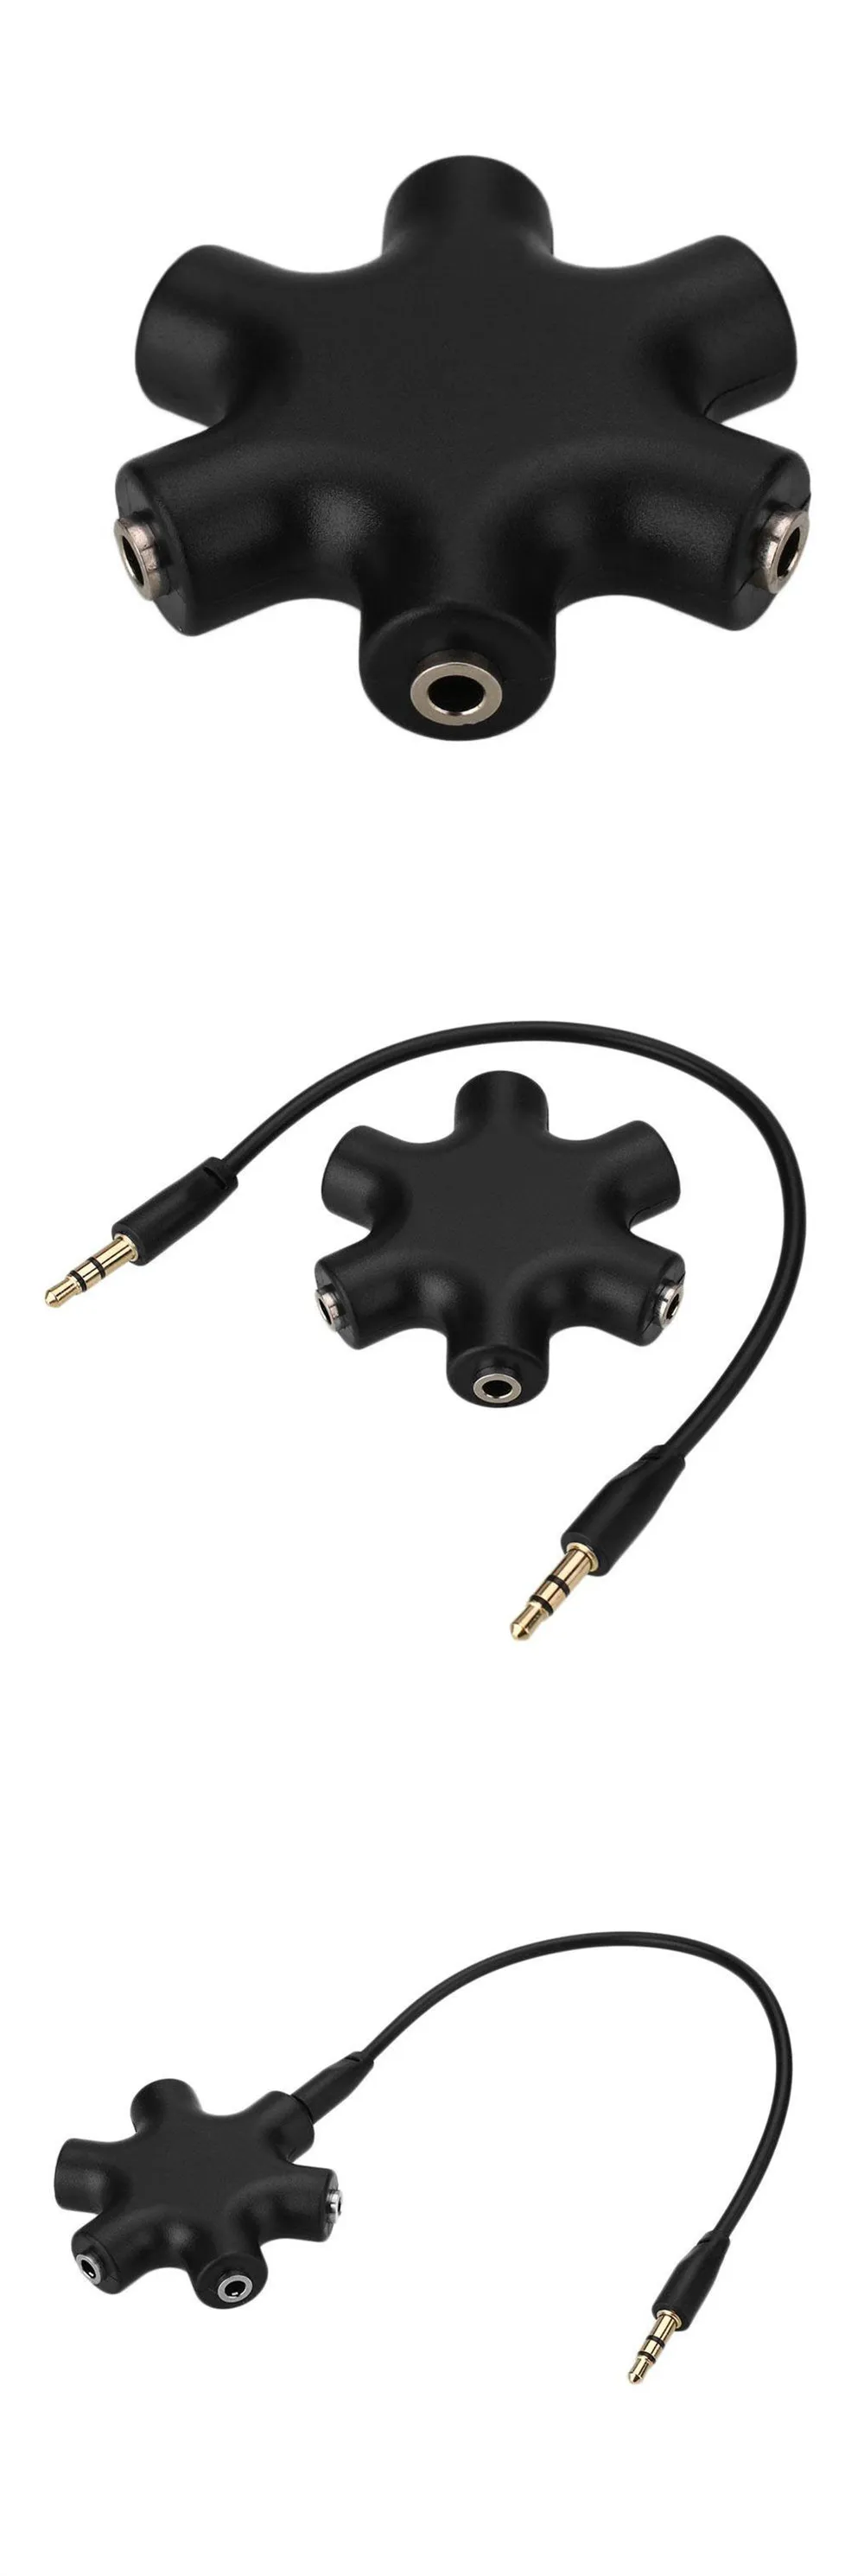 Audio Multi Kopfhorer Splitter 3 5mm W Kabel Farbe Opt Buy Audio Multi Kopfhorer Splitter 3 5mm W Kabel Farbe Opt 3 Product On Alibaba Com